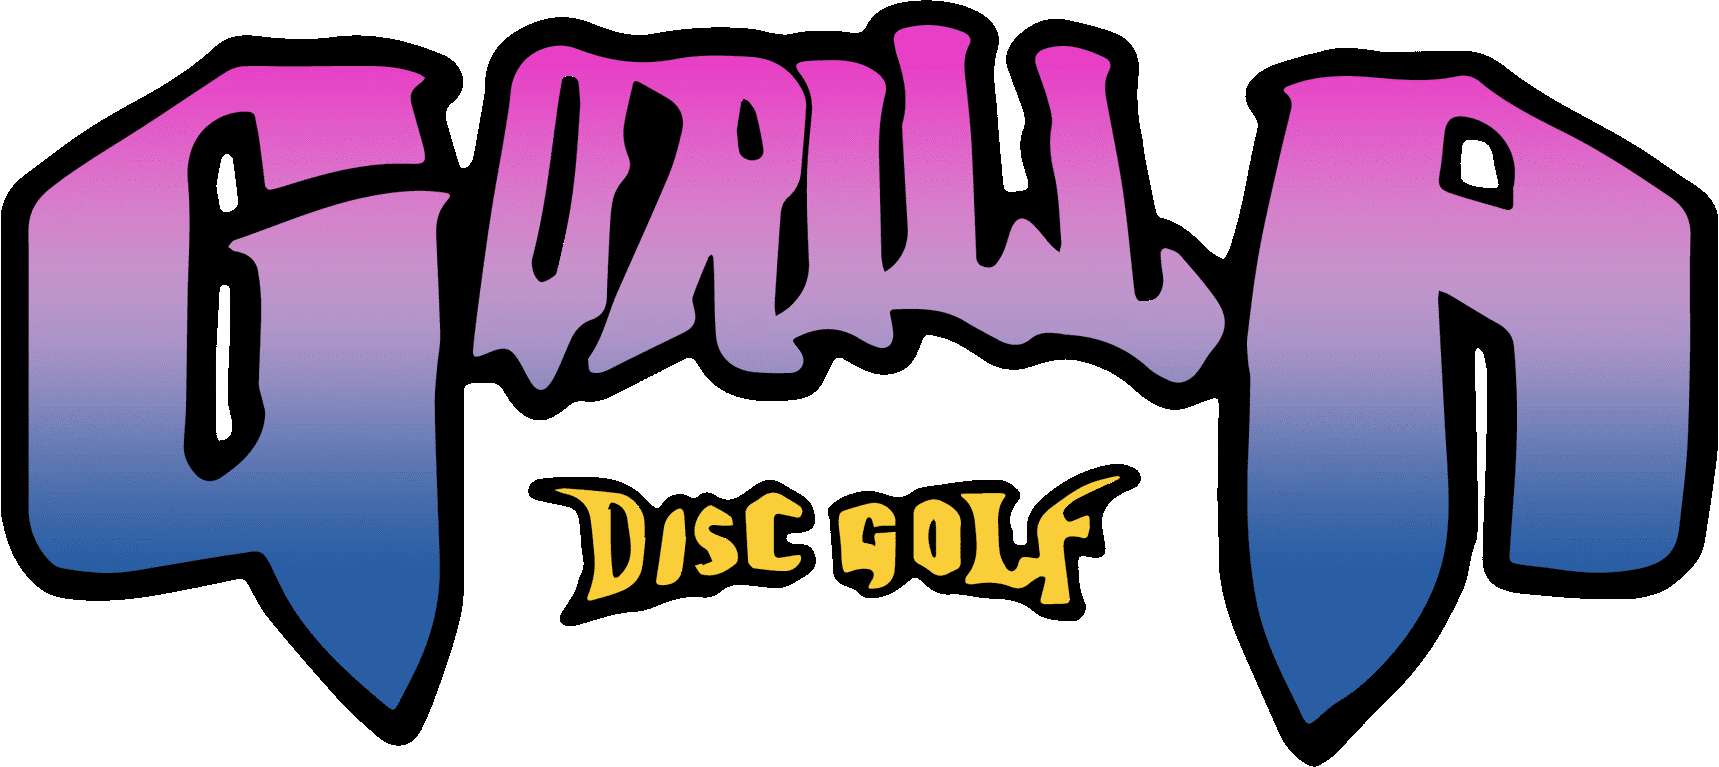 Gorilla Disc Golf